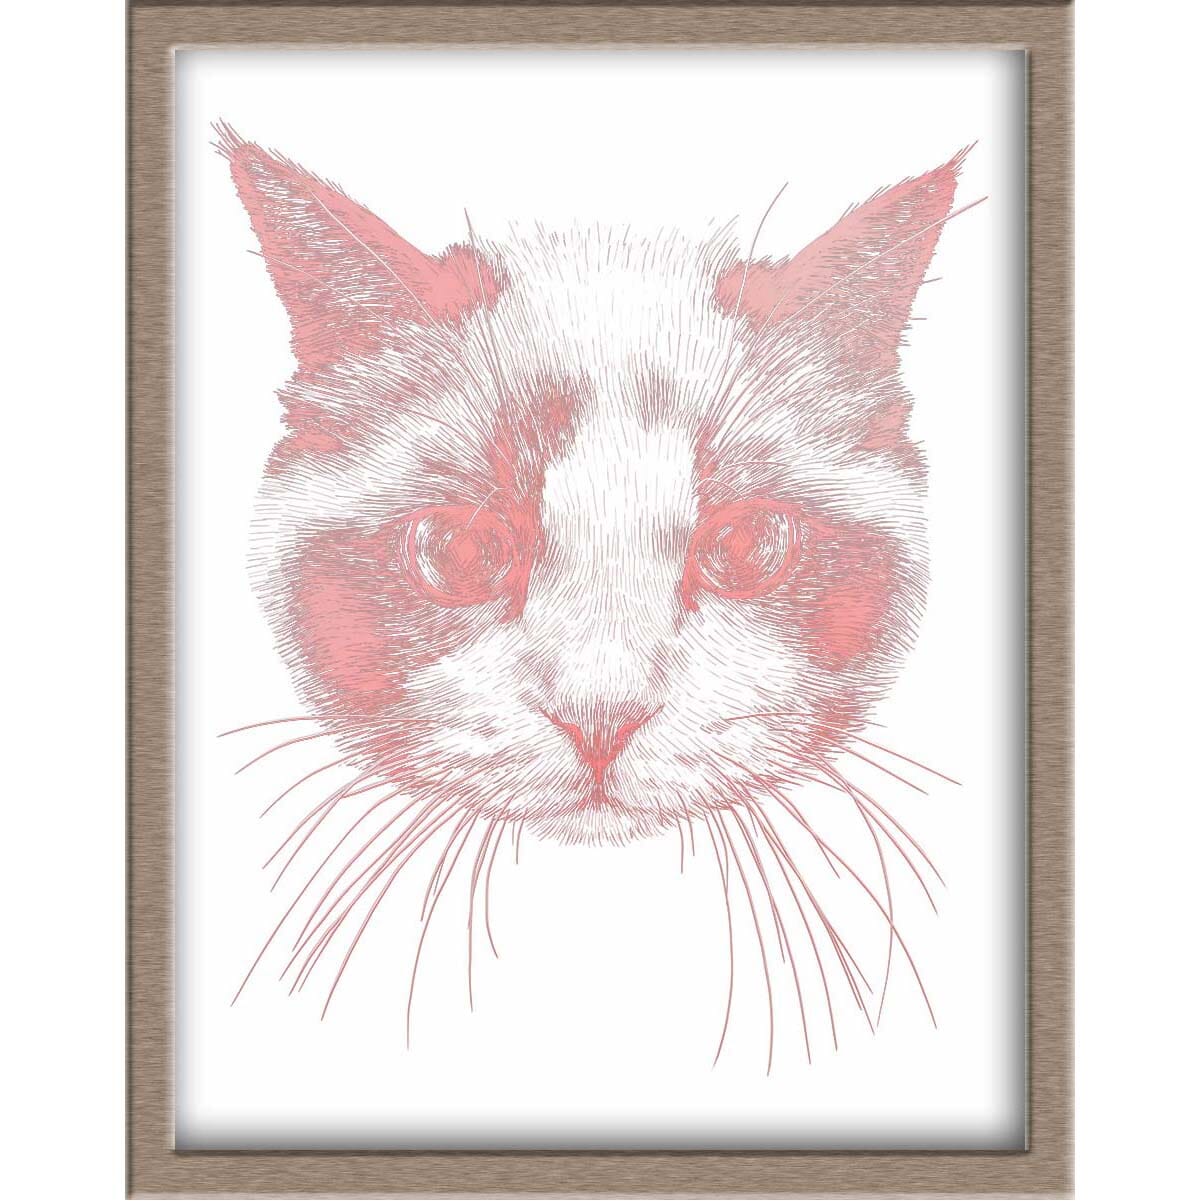 Ragdoll Cat Foiled Print Posters, Prints, & Visual Artwork JoyousJoyfulJoyness 